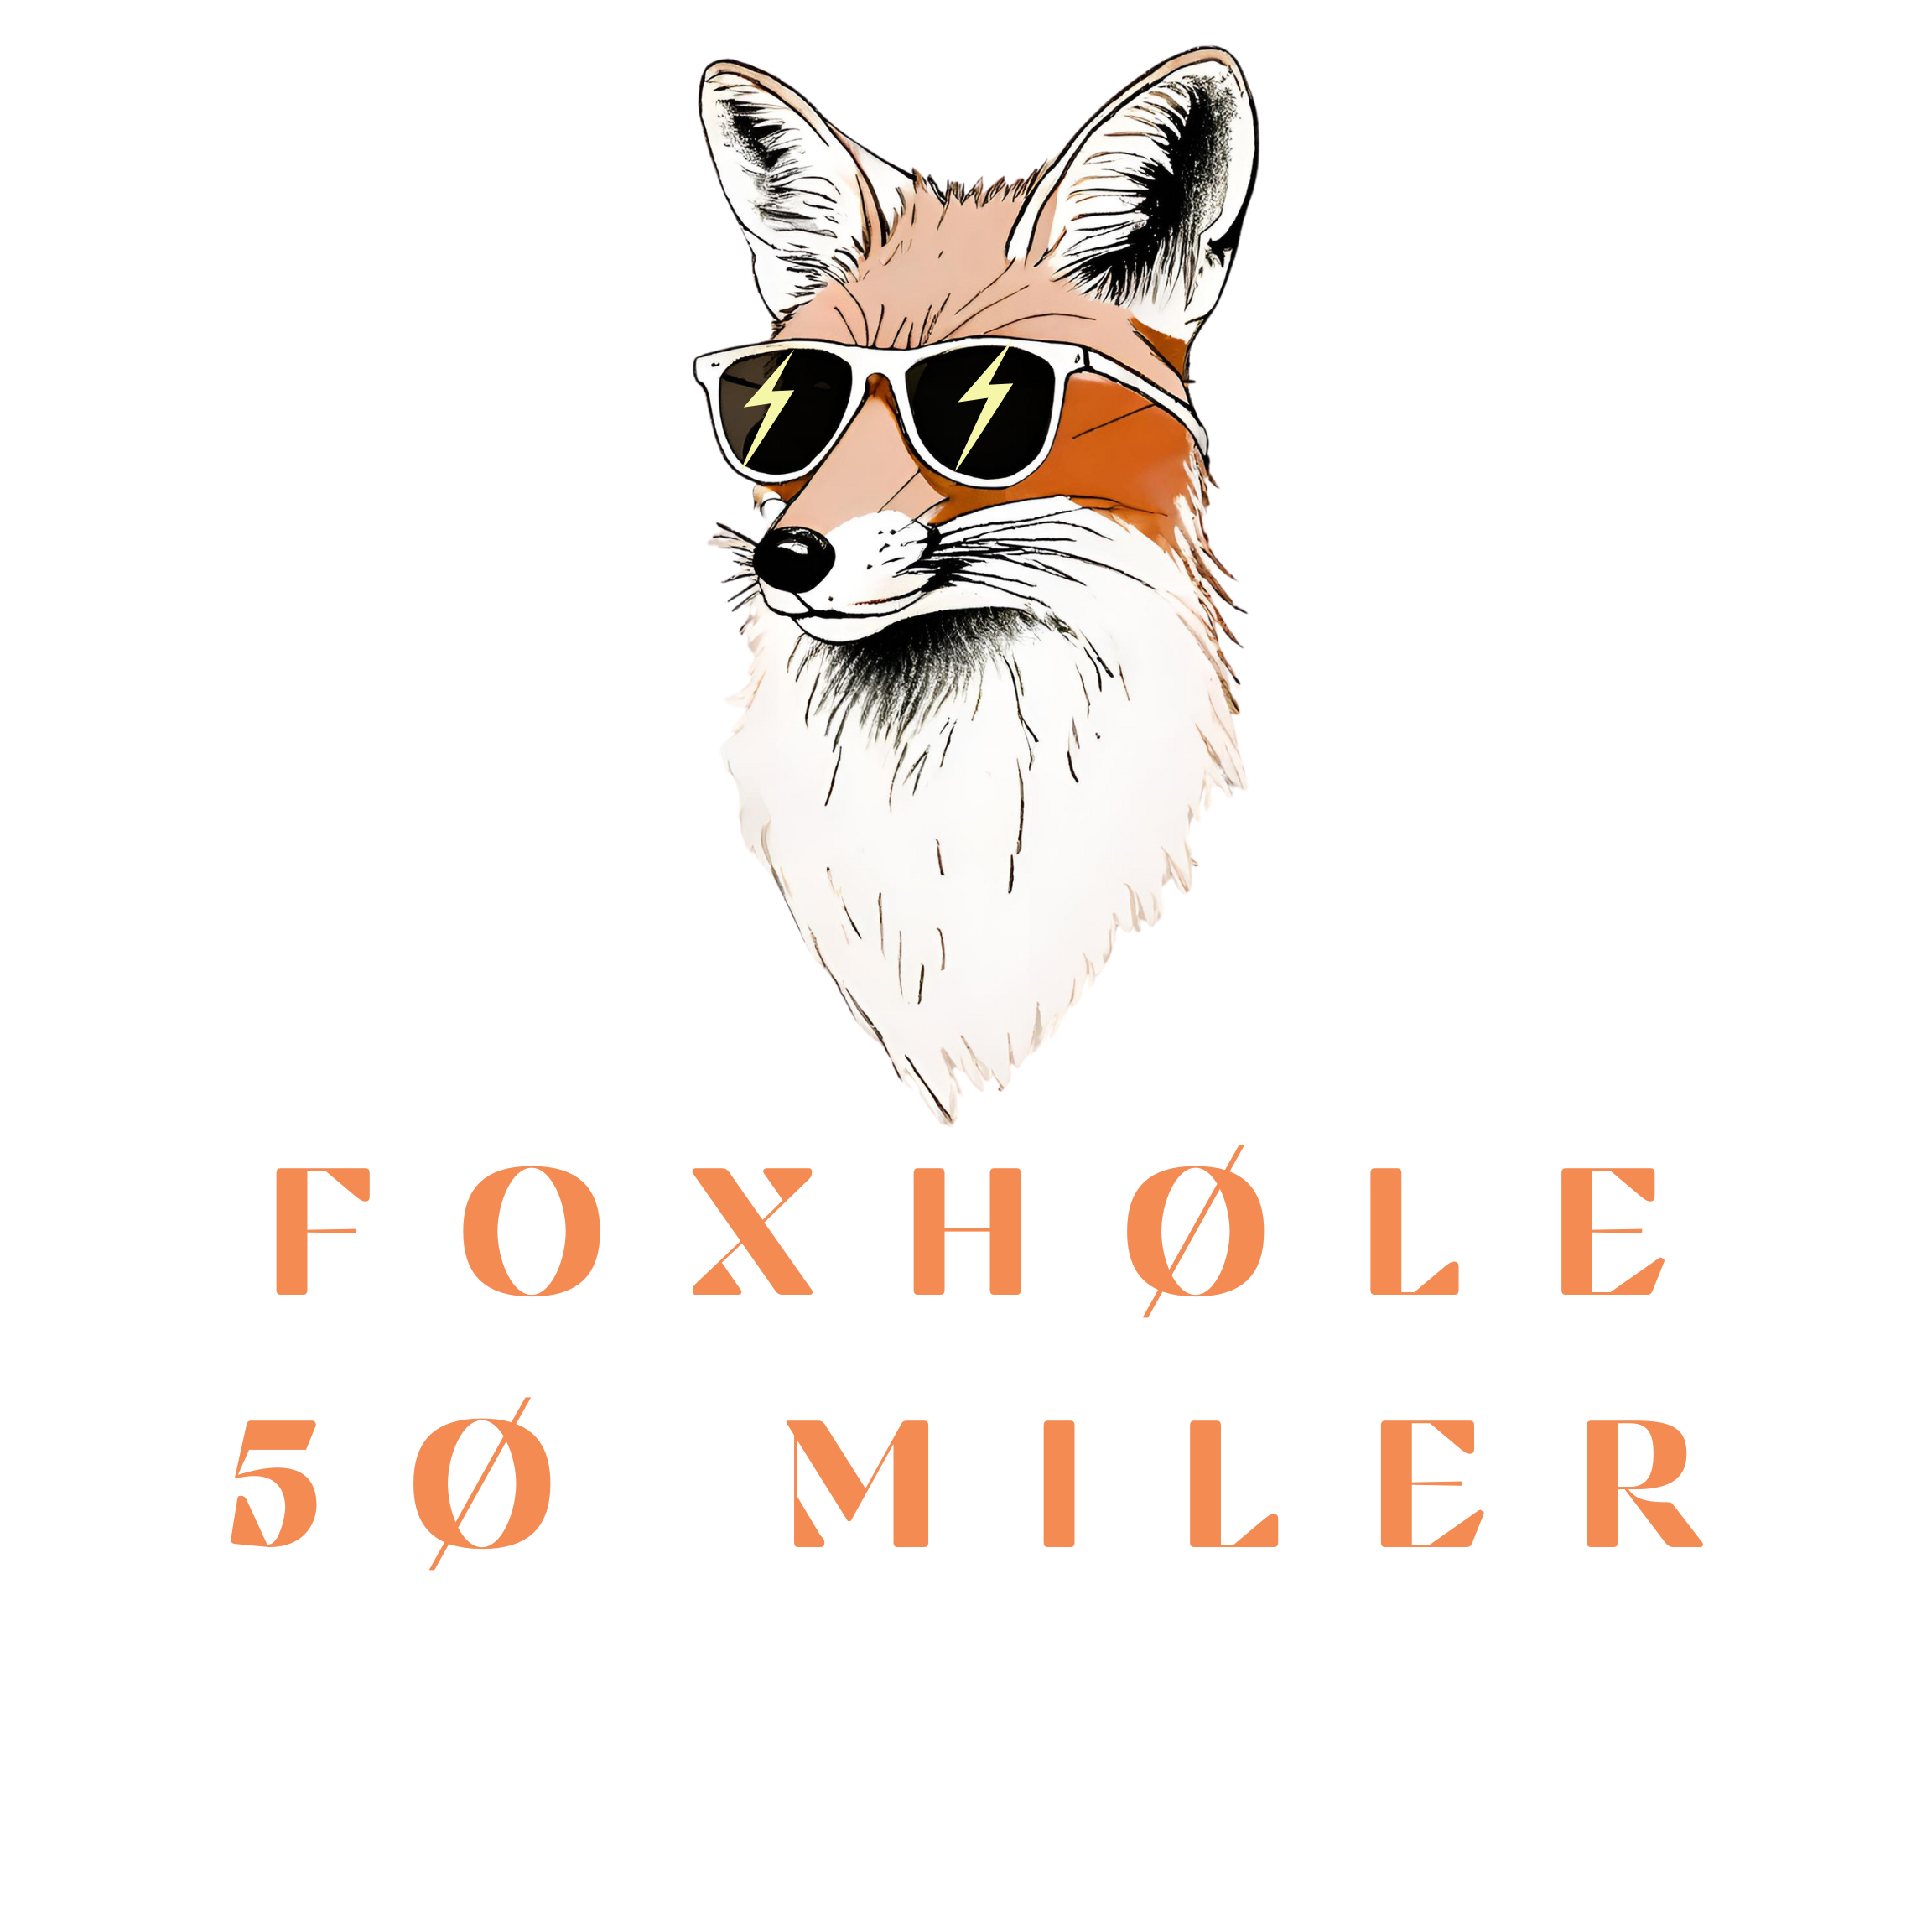 FOXHOLE 50